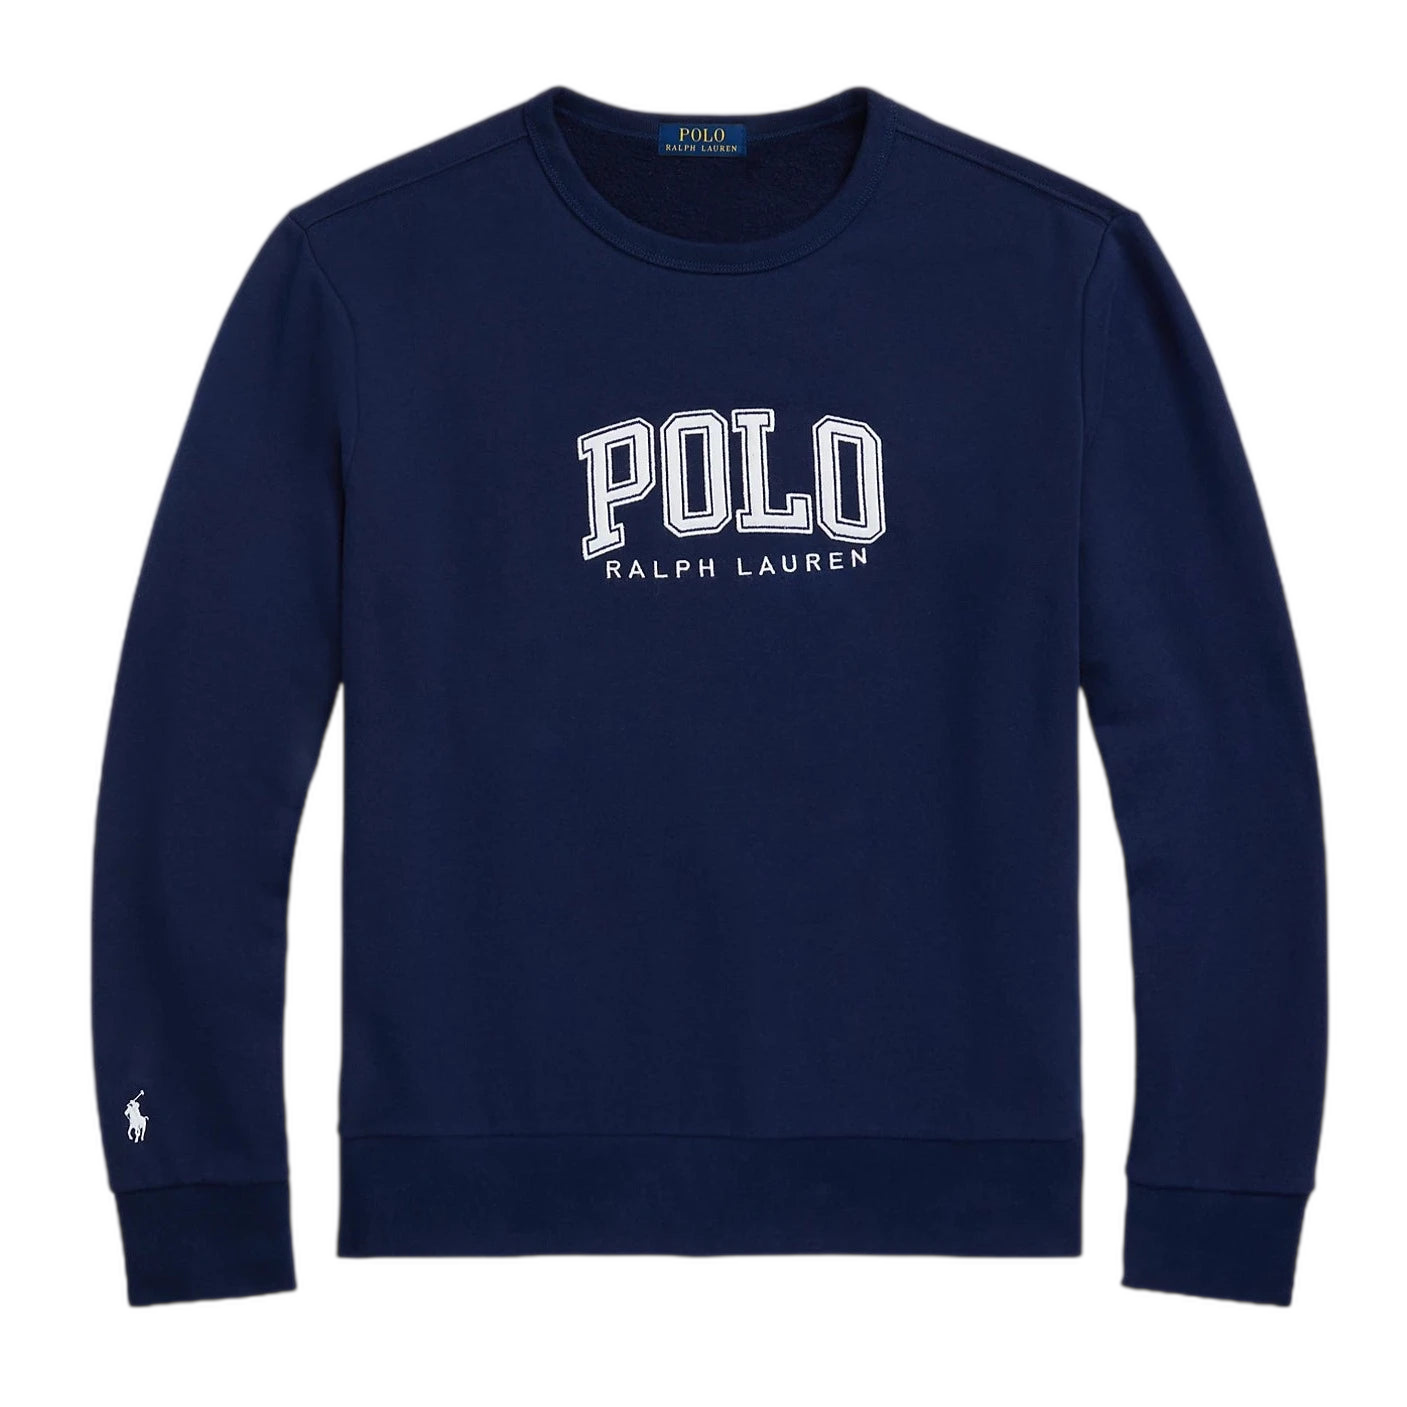 Pull logo Polo vasity